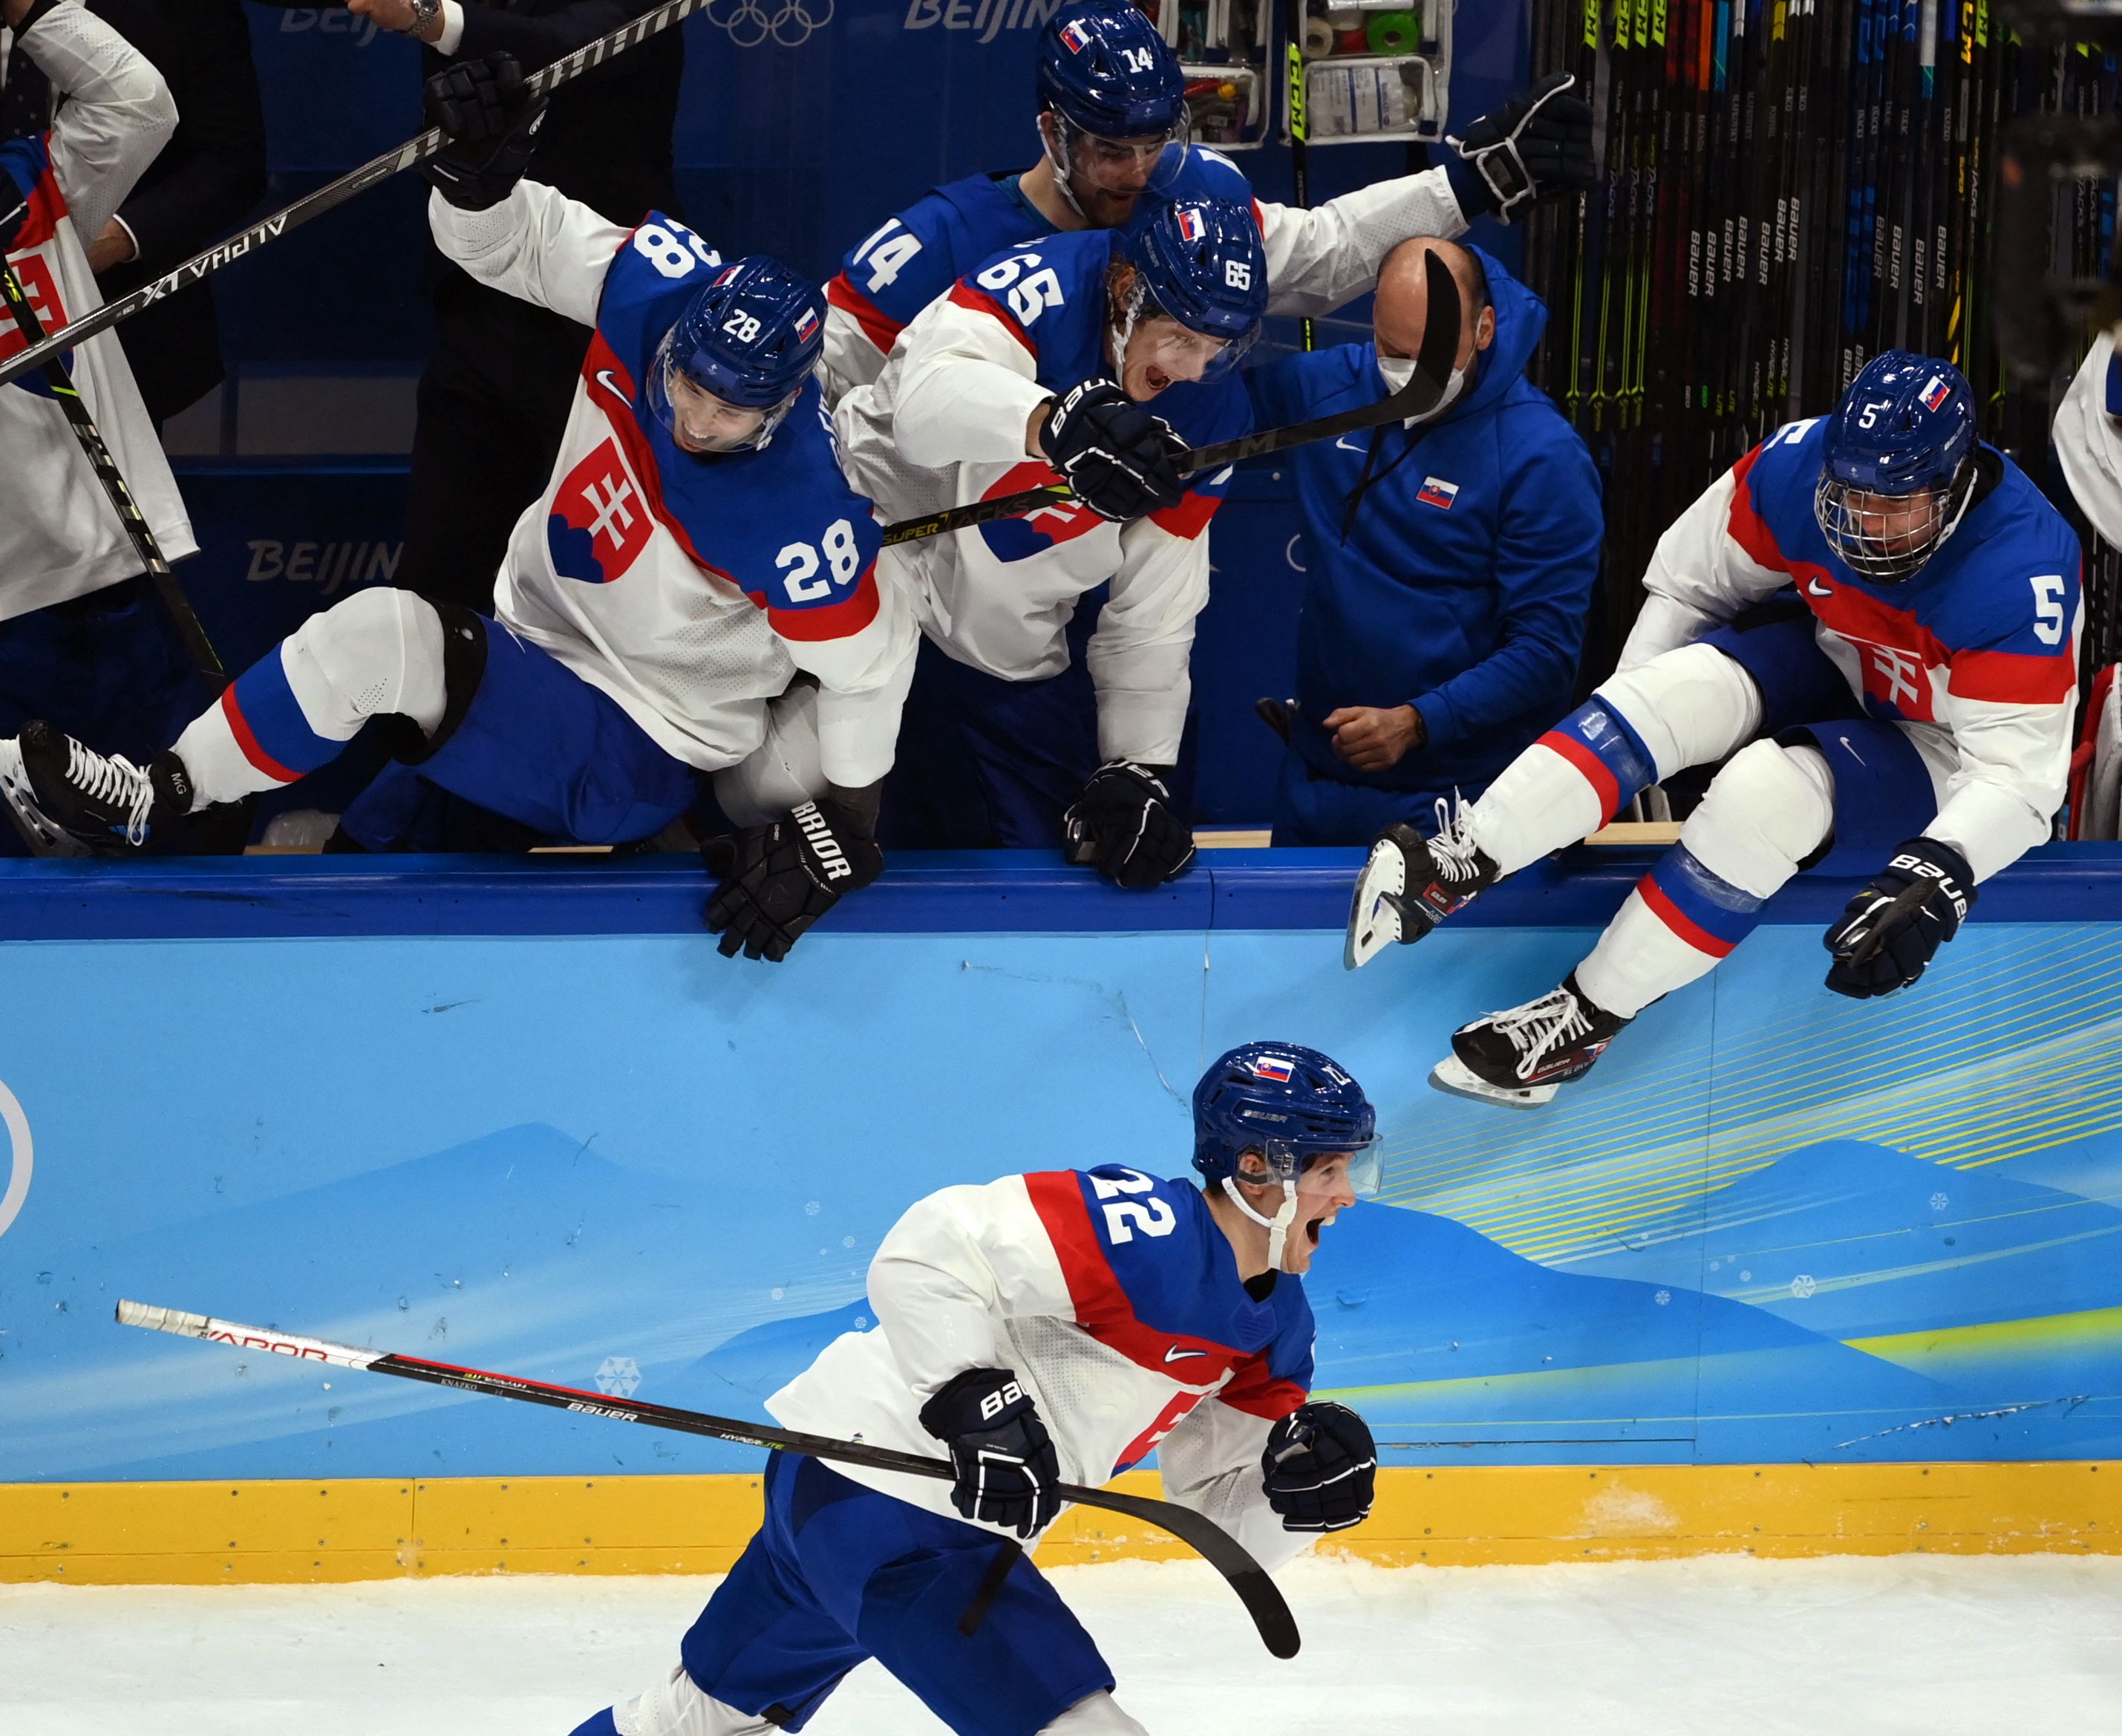 US, Canada reach ice hockey worlds semis